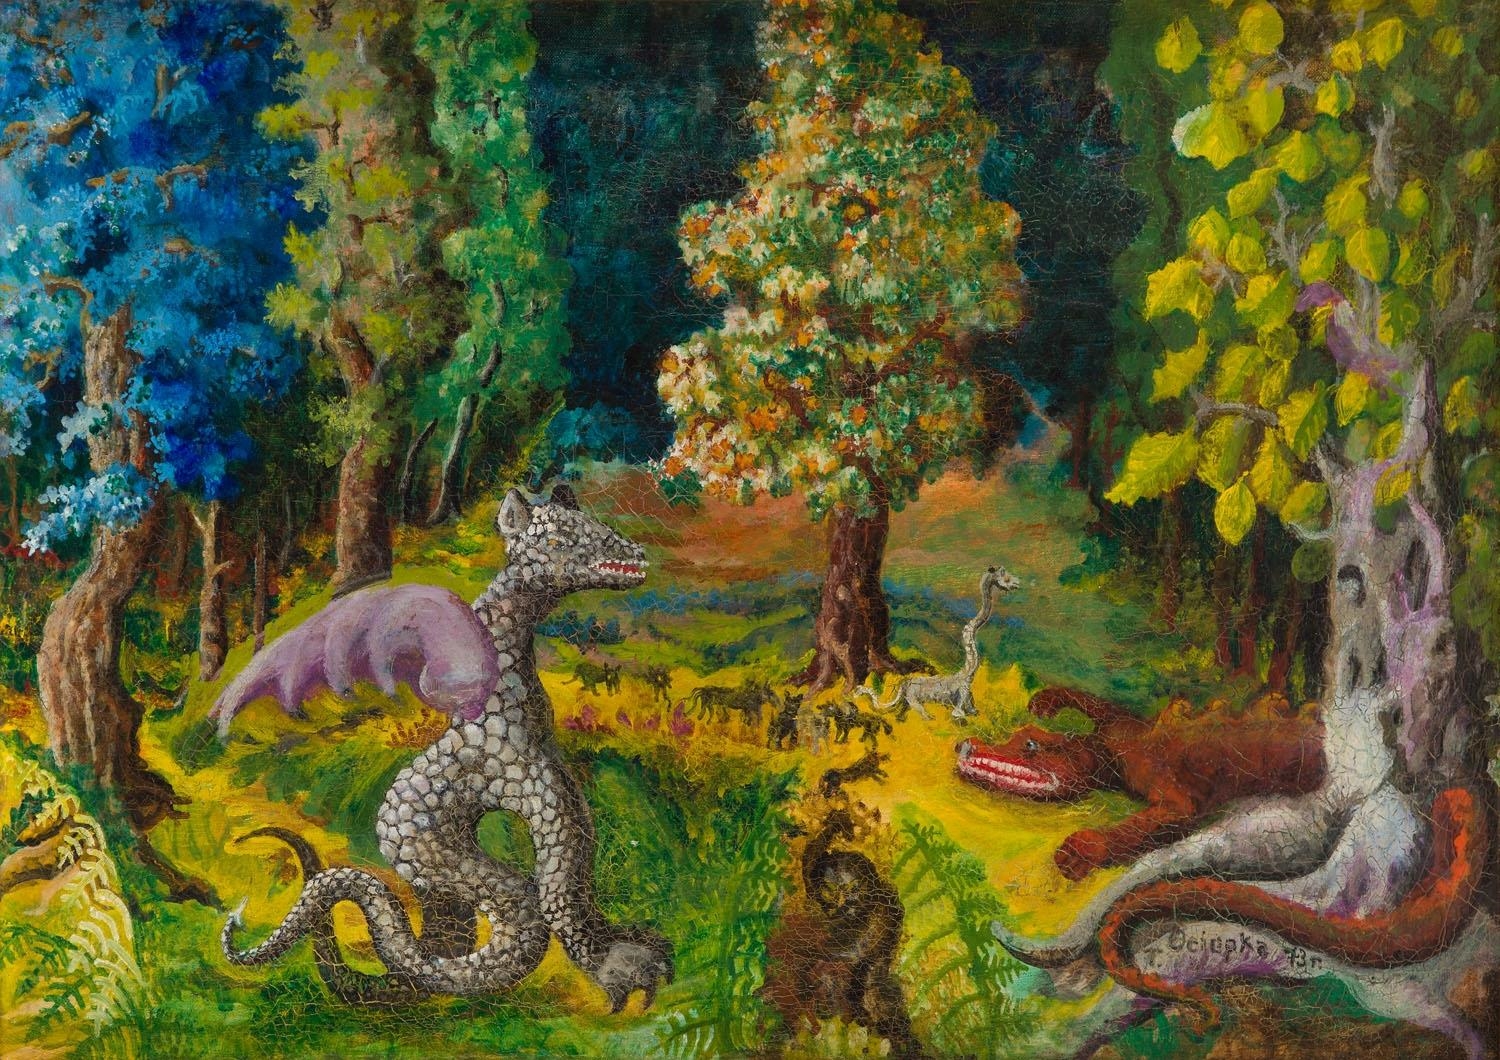 Jungle with a Dragon by Teofil Ociepka, 1967